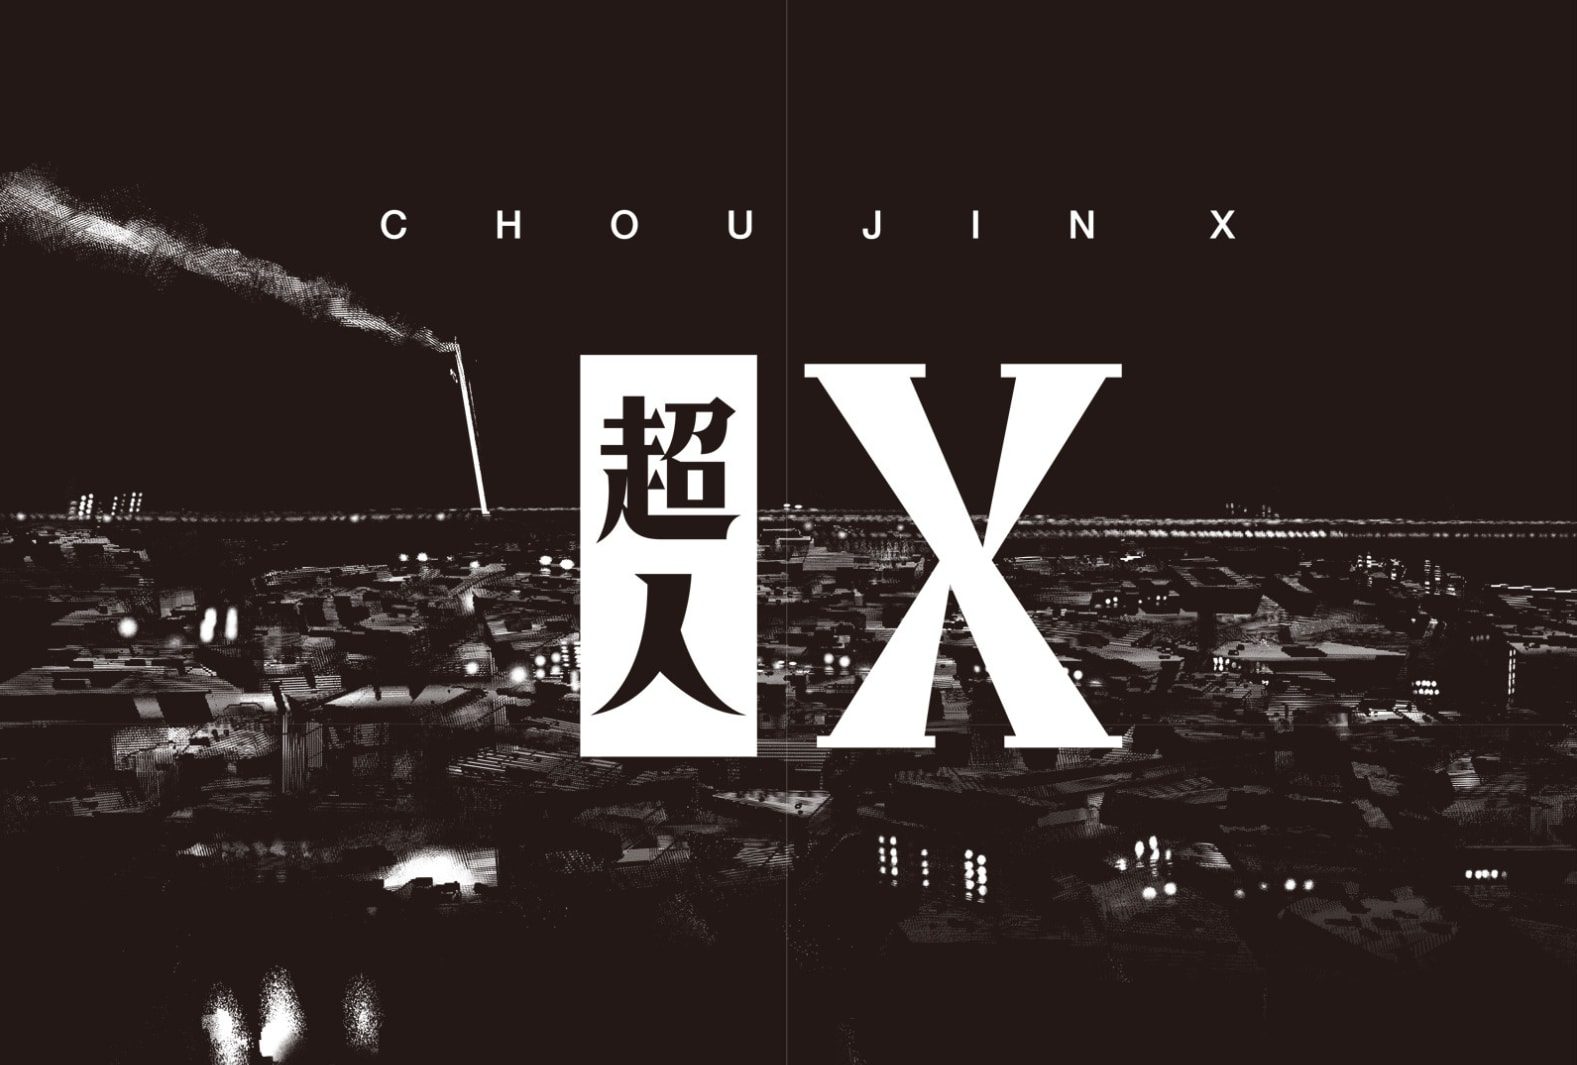 Choujin x Anime Adaptation: will it happen?